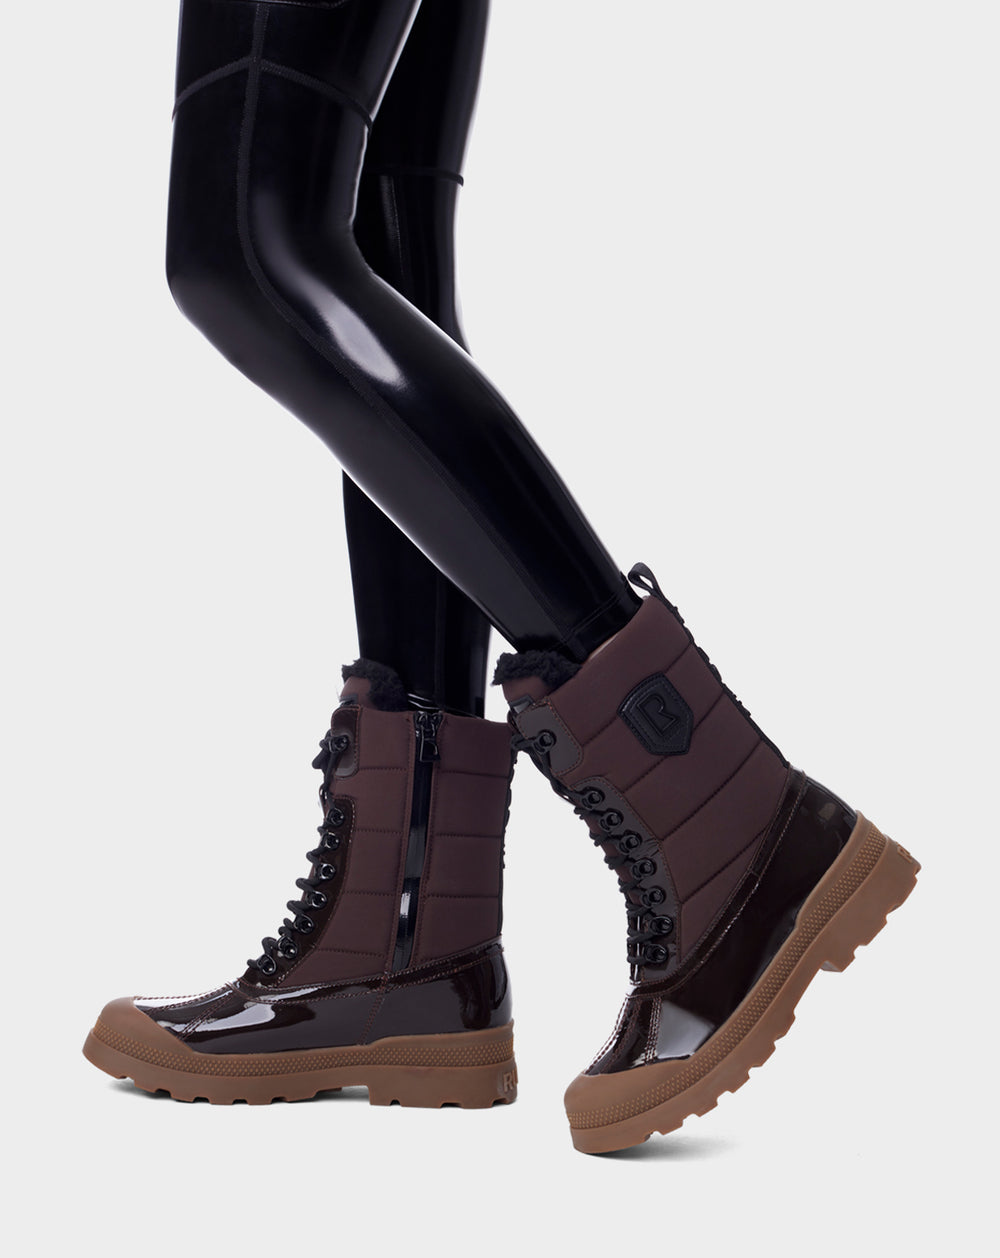 Rudsak Lex Women's Recycled Stormshell Winter Boots (Chocolate / 38)